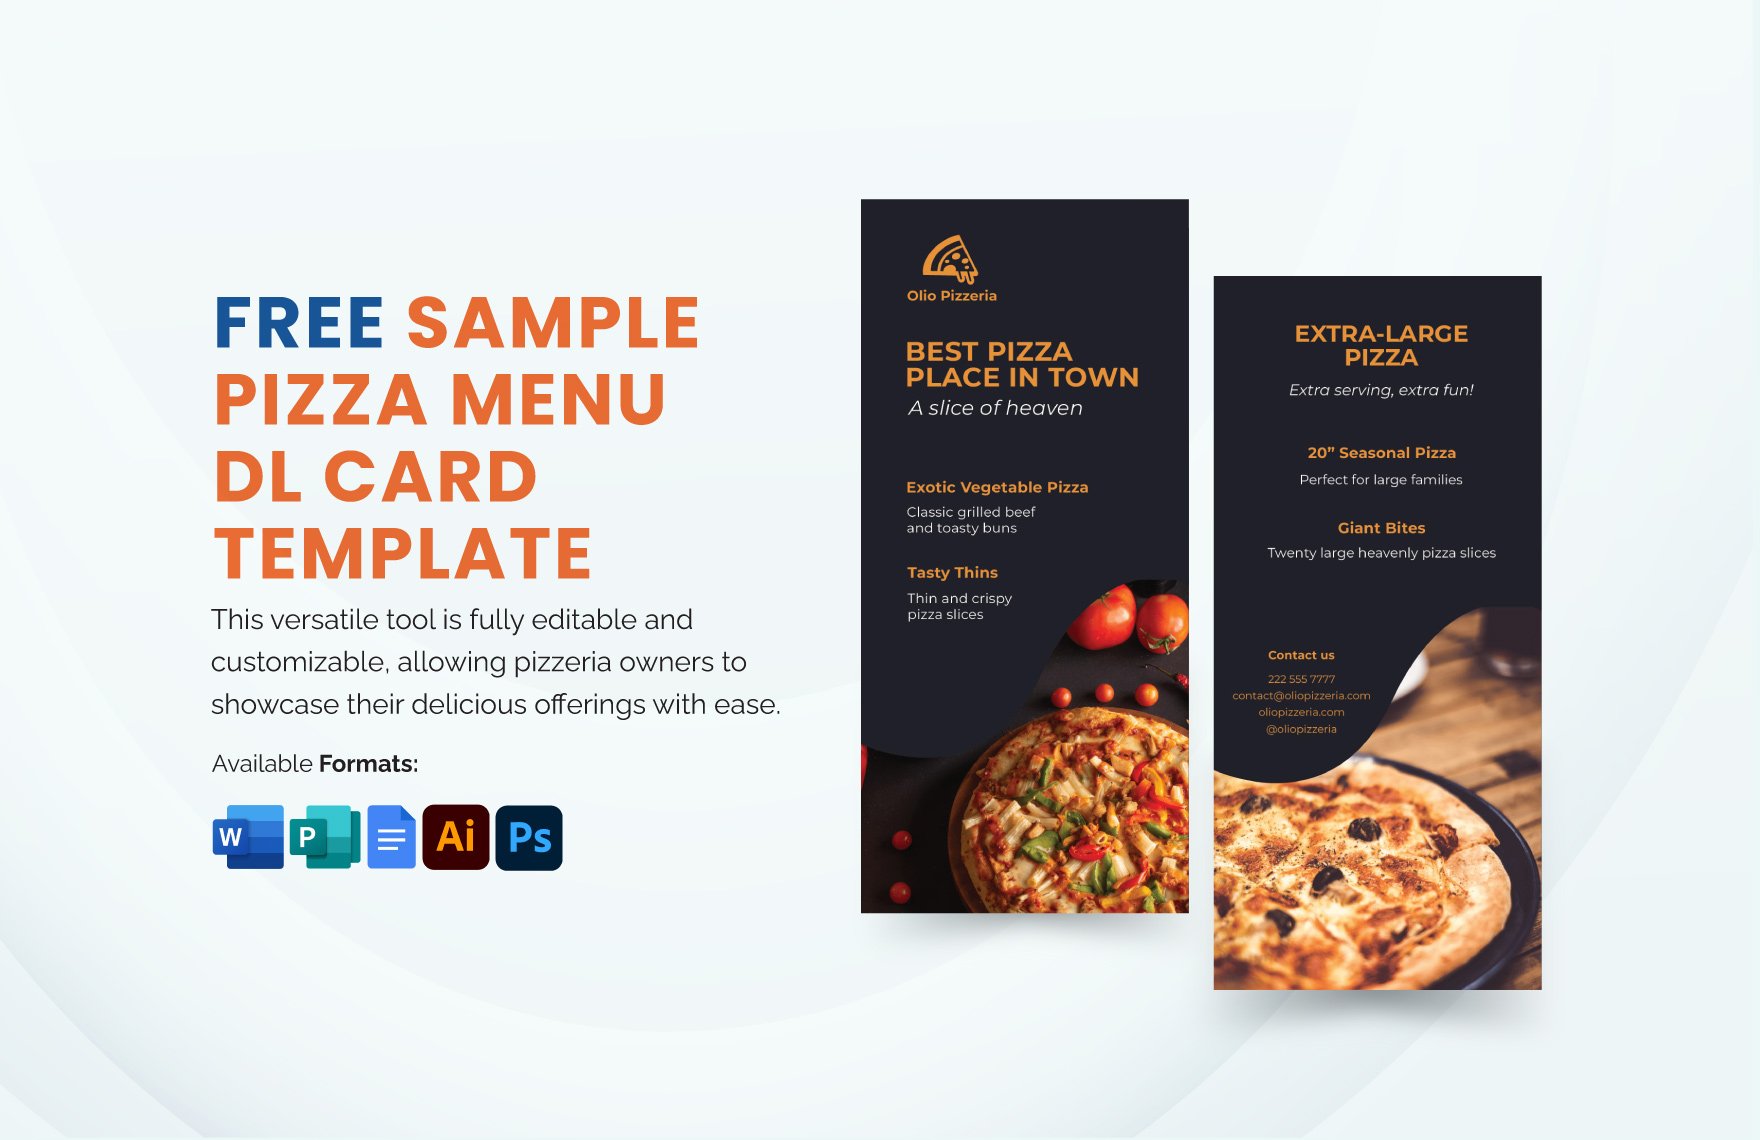 Free Sample Pizza Menu DL Card Template